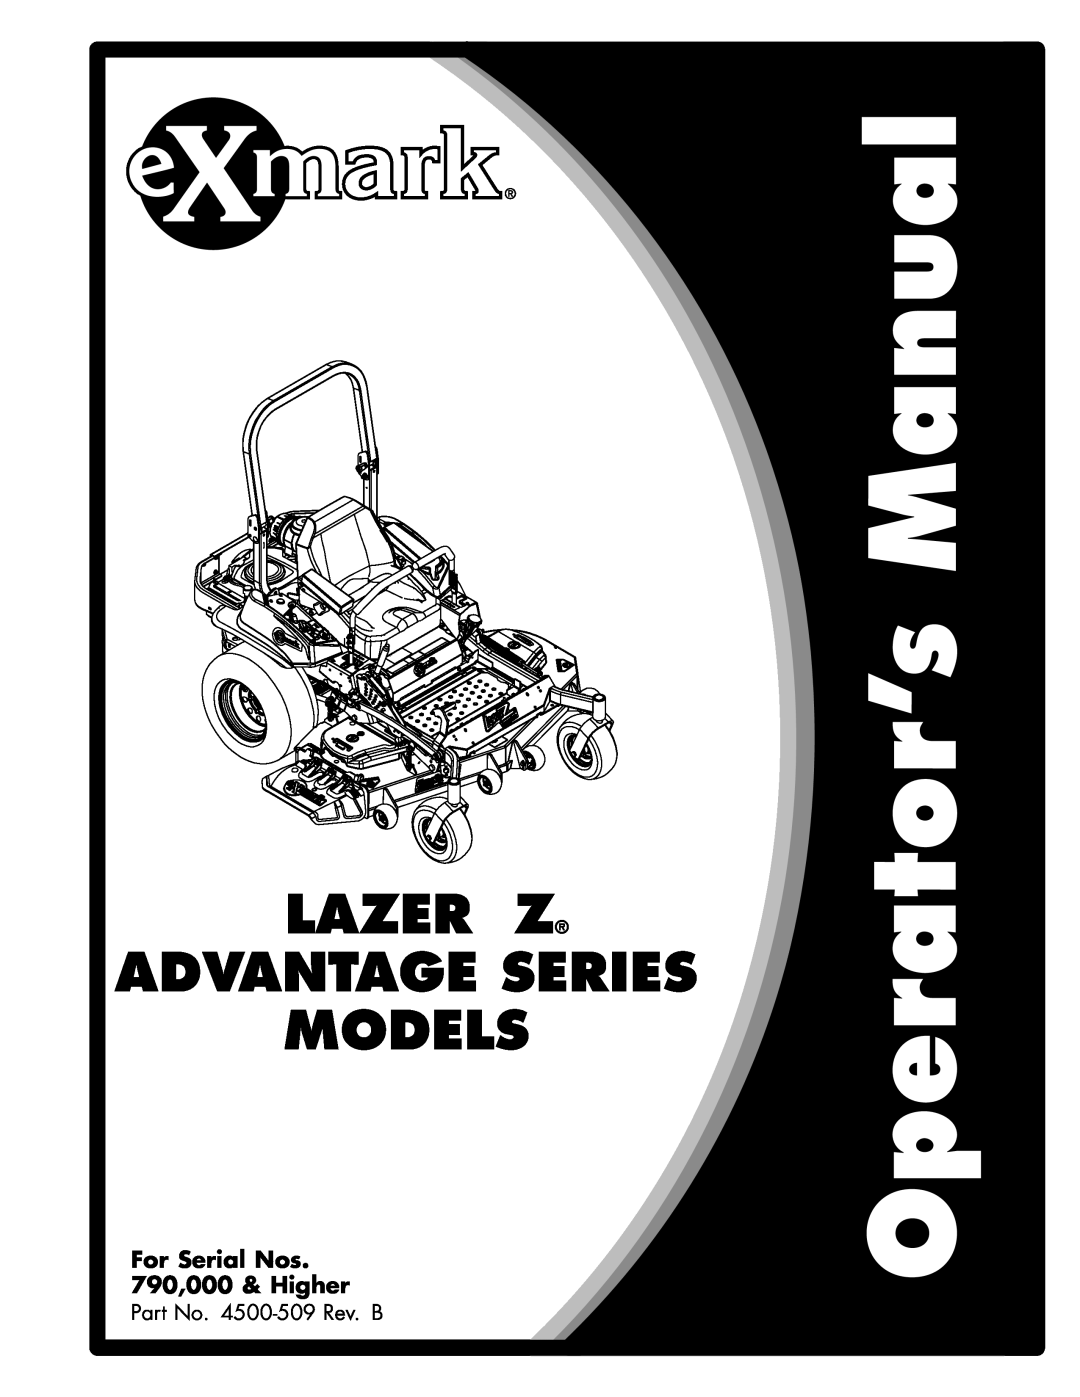 Exmark 000 & higher, S/N 790 manual Lazer Z Models, For Serial Nos 790,000 & Higher, Part No. 4500-471Rev. A 